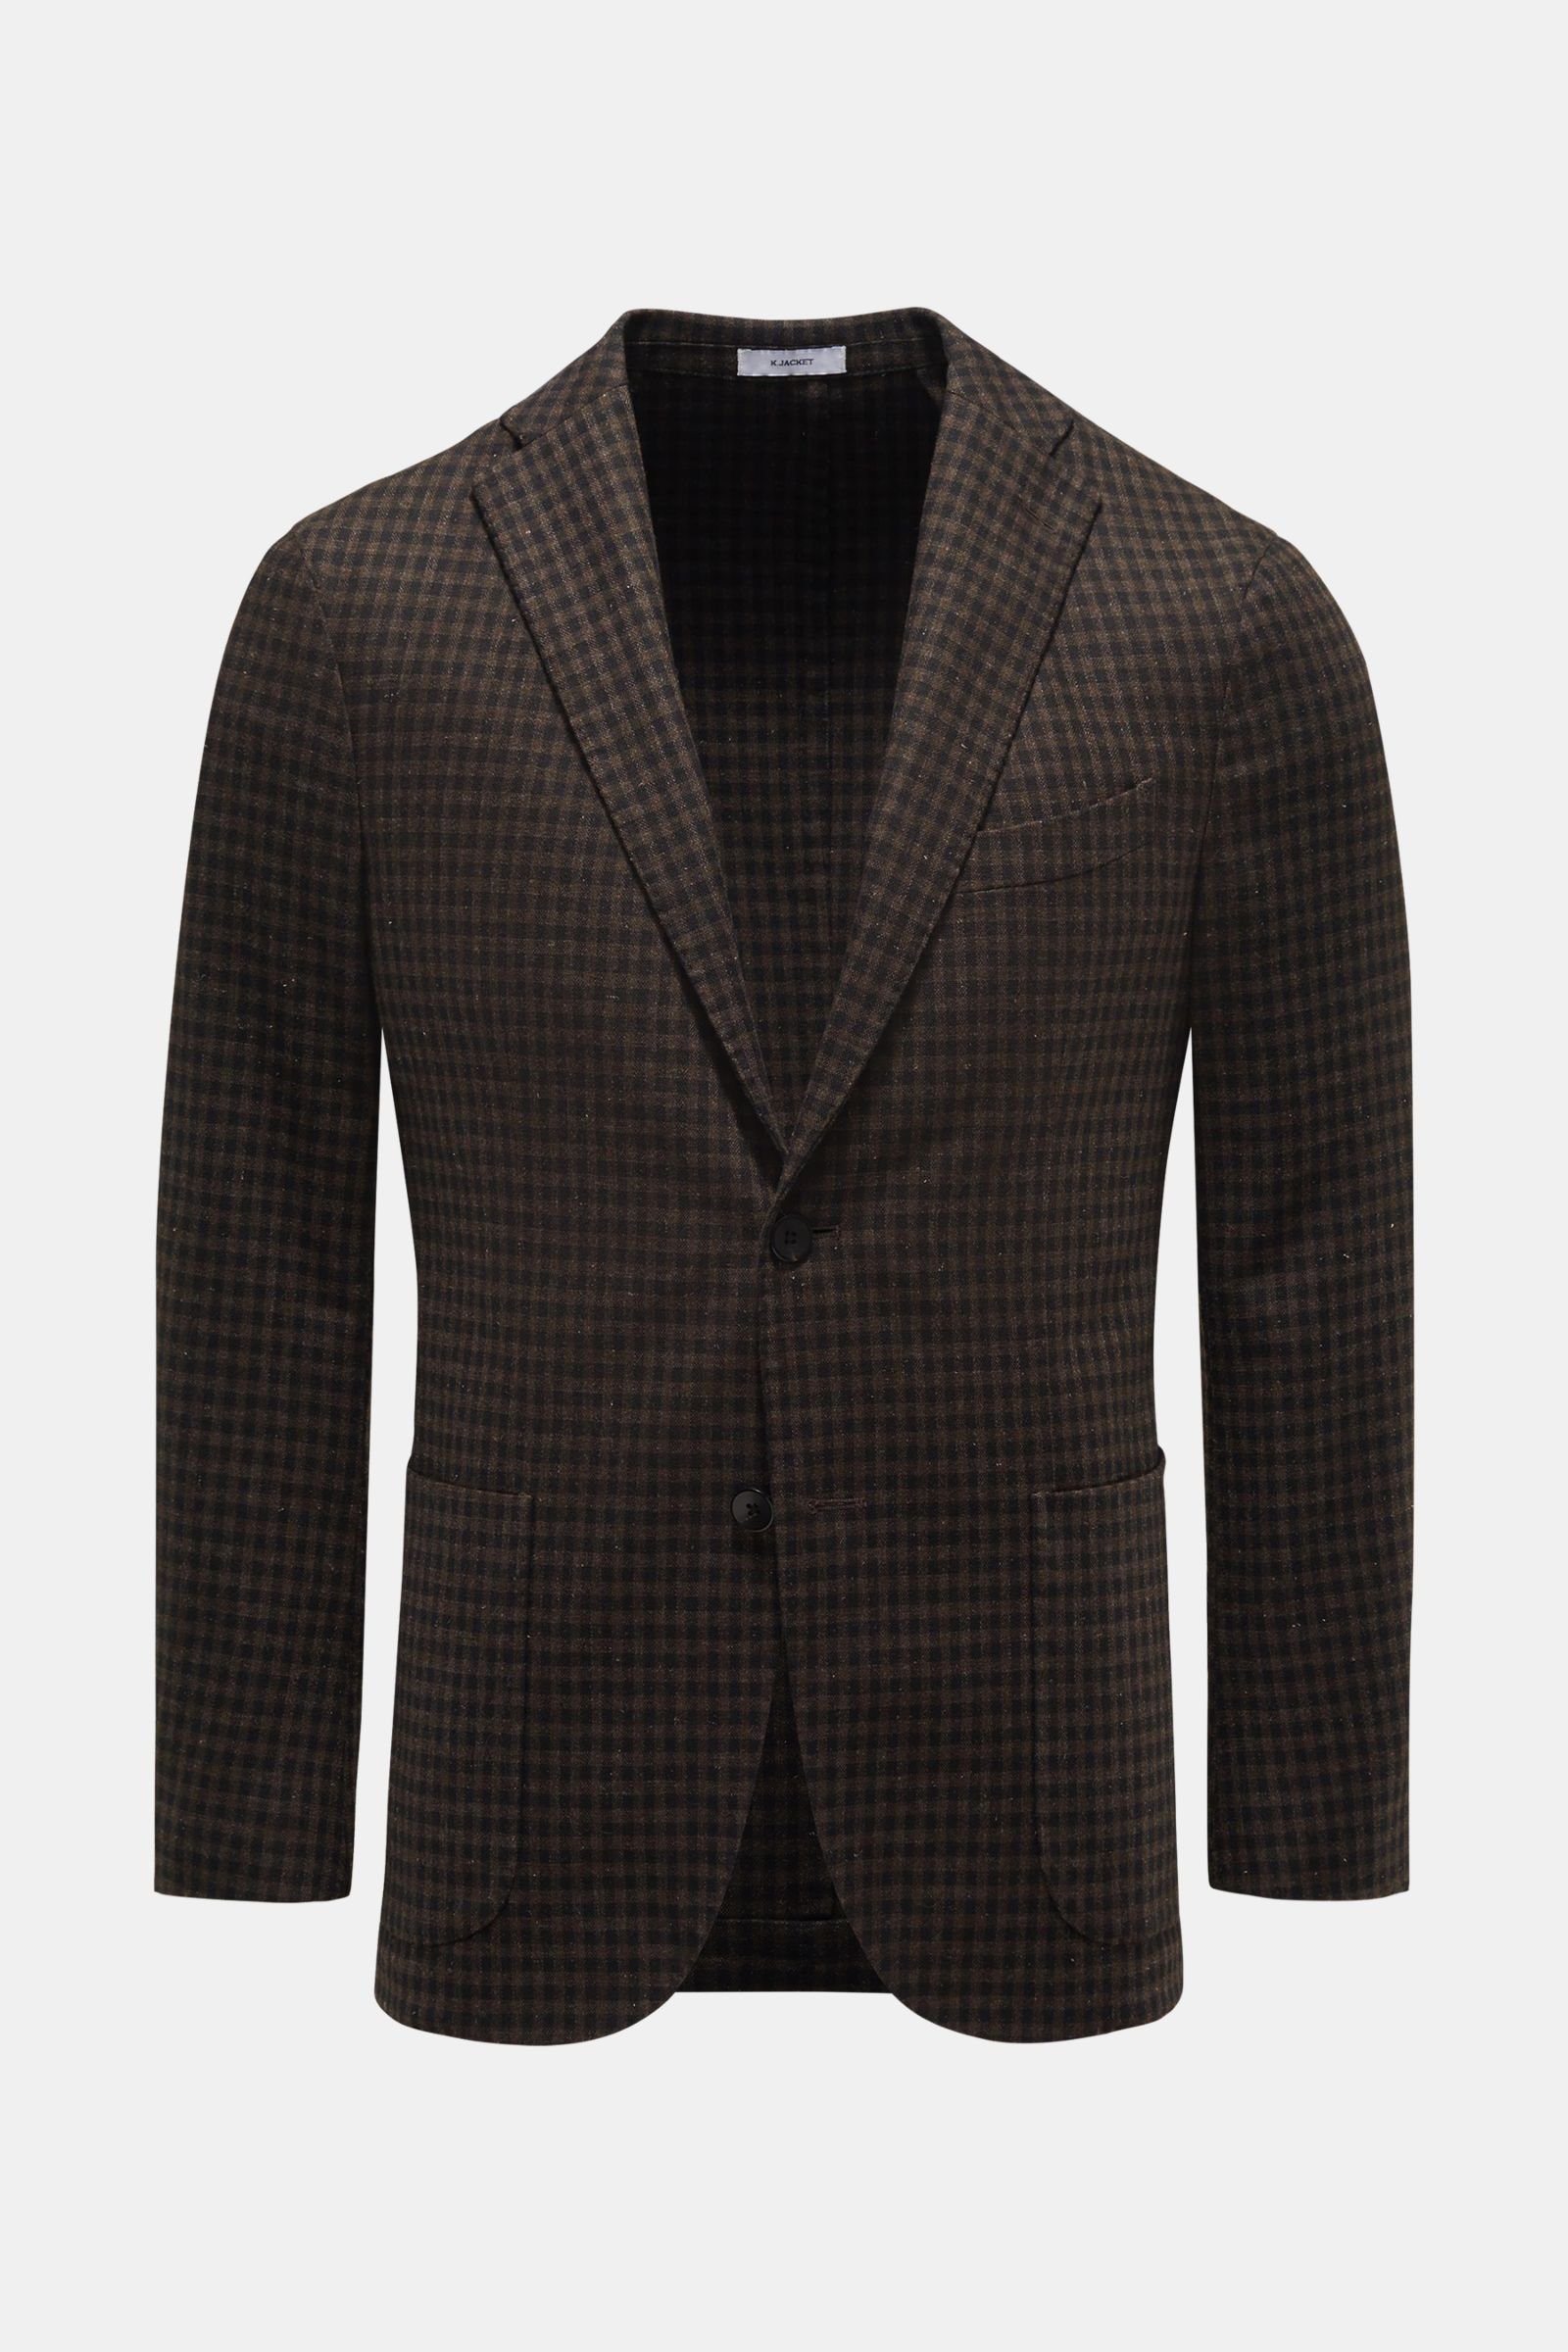 Smart-casual jacket 'K. Jacket' dark brown/black checked